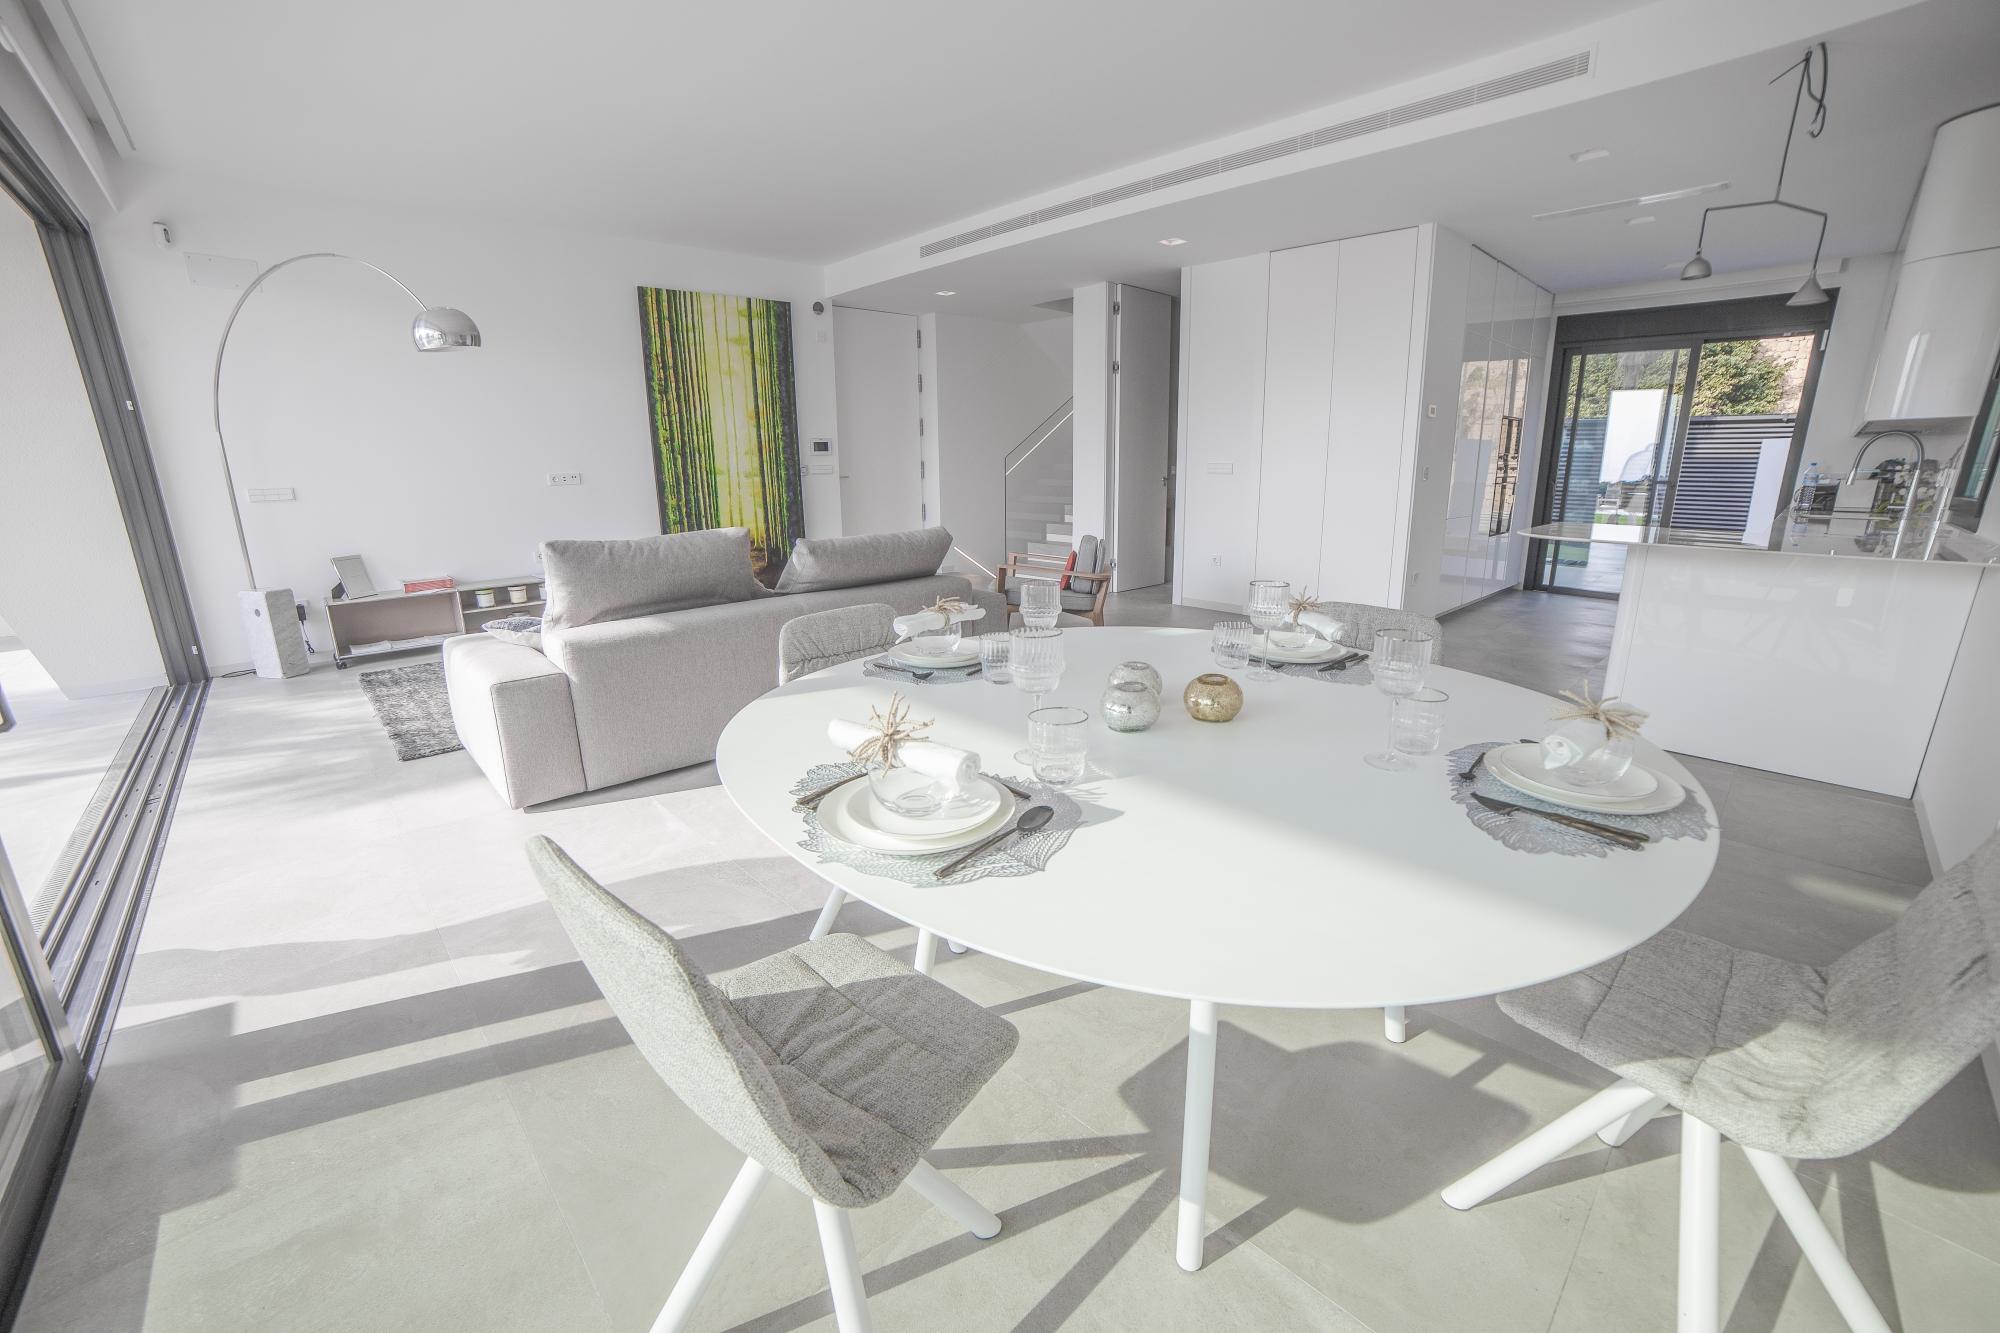 3-4 bedroom modern villas with sea views in Finestrat